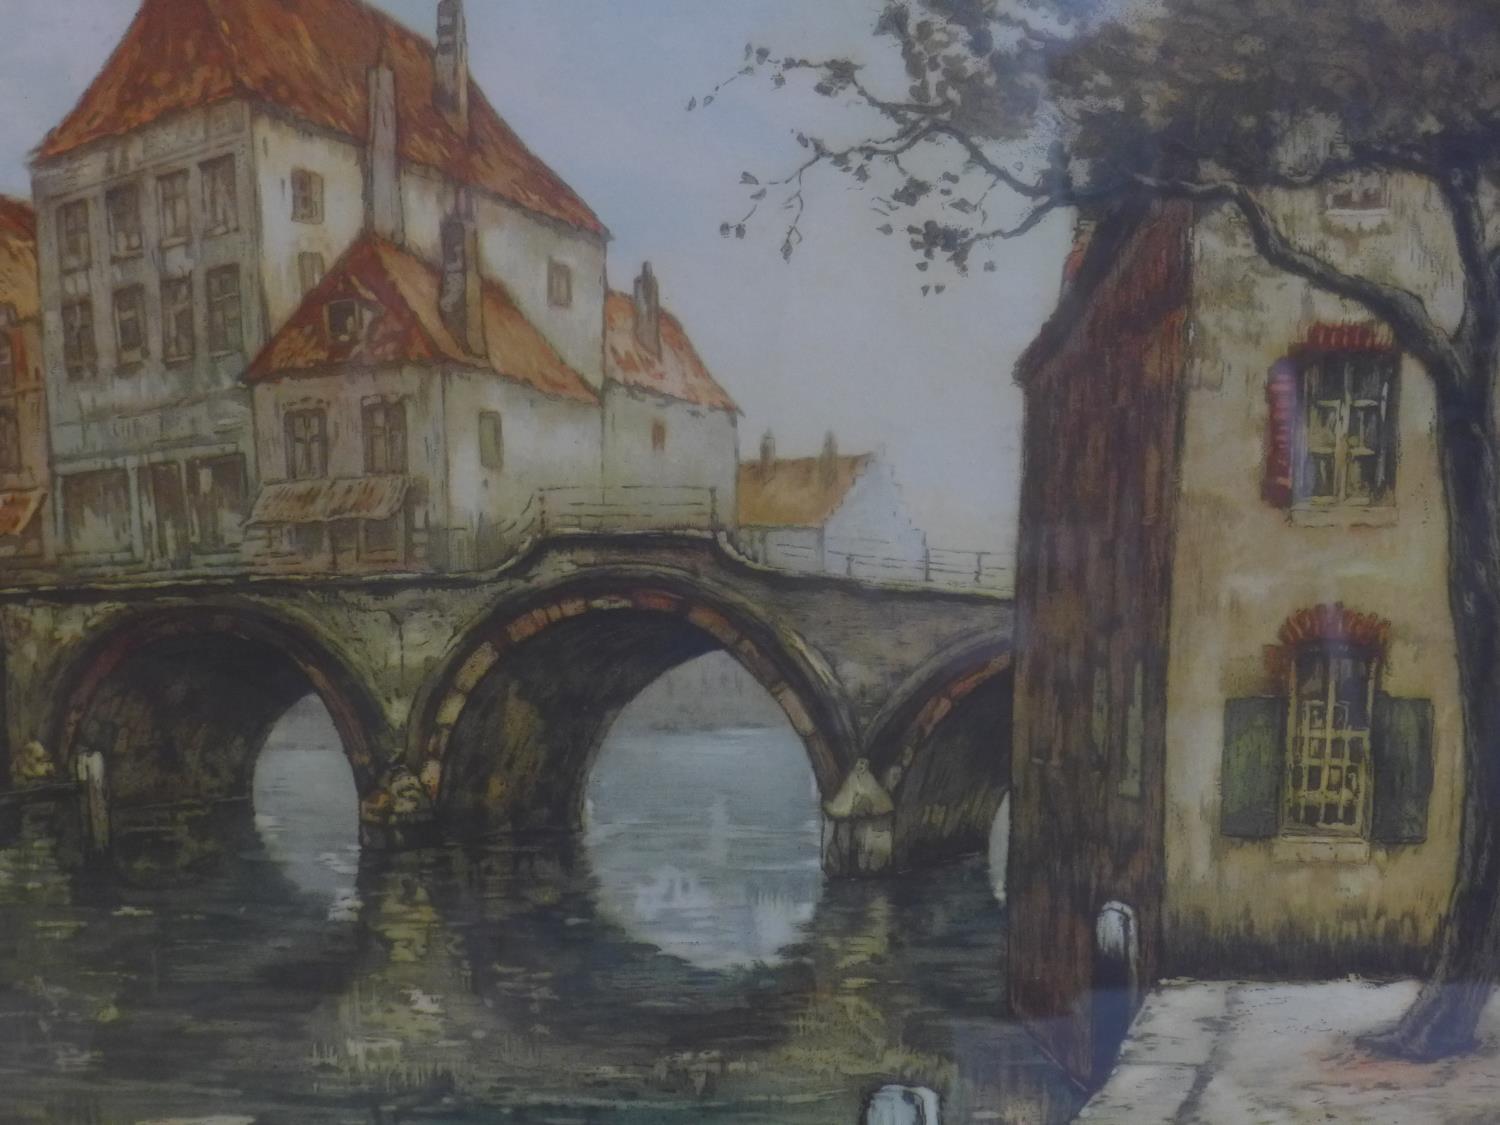 After Walter Joseph Neuhof, 'The Old Bridge in Town', art print, framed and glazed, 43 x 53cm